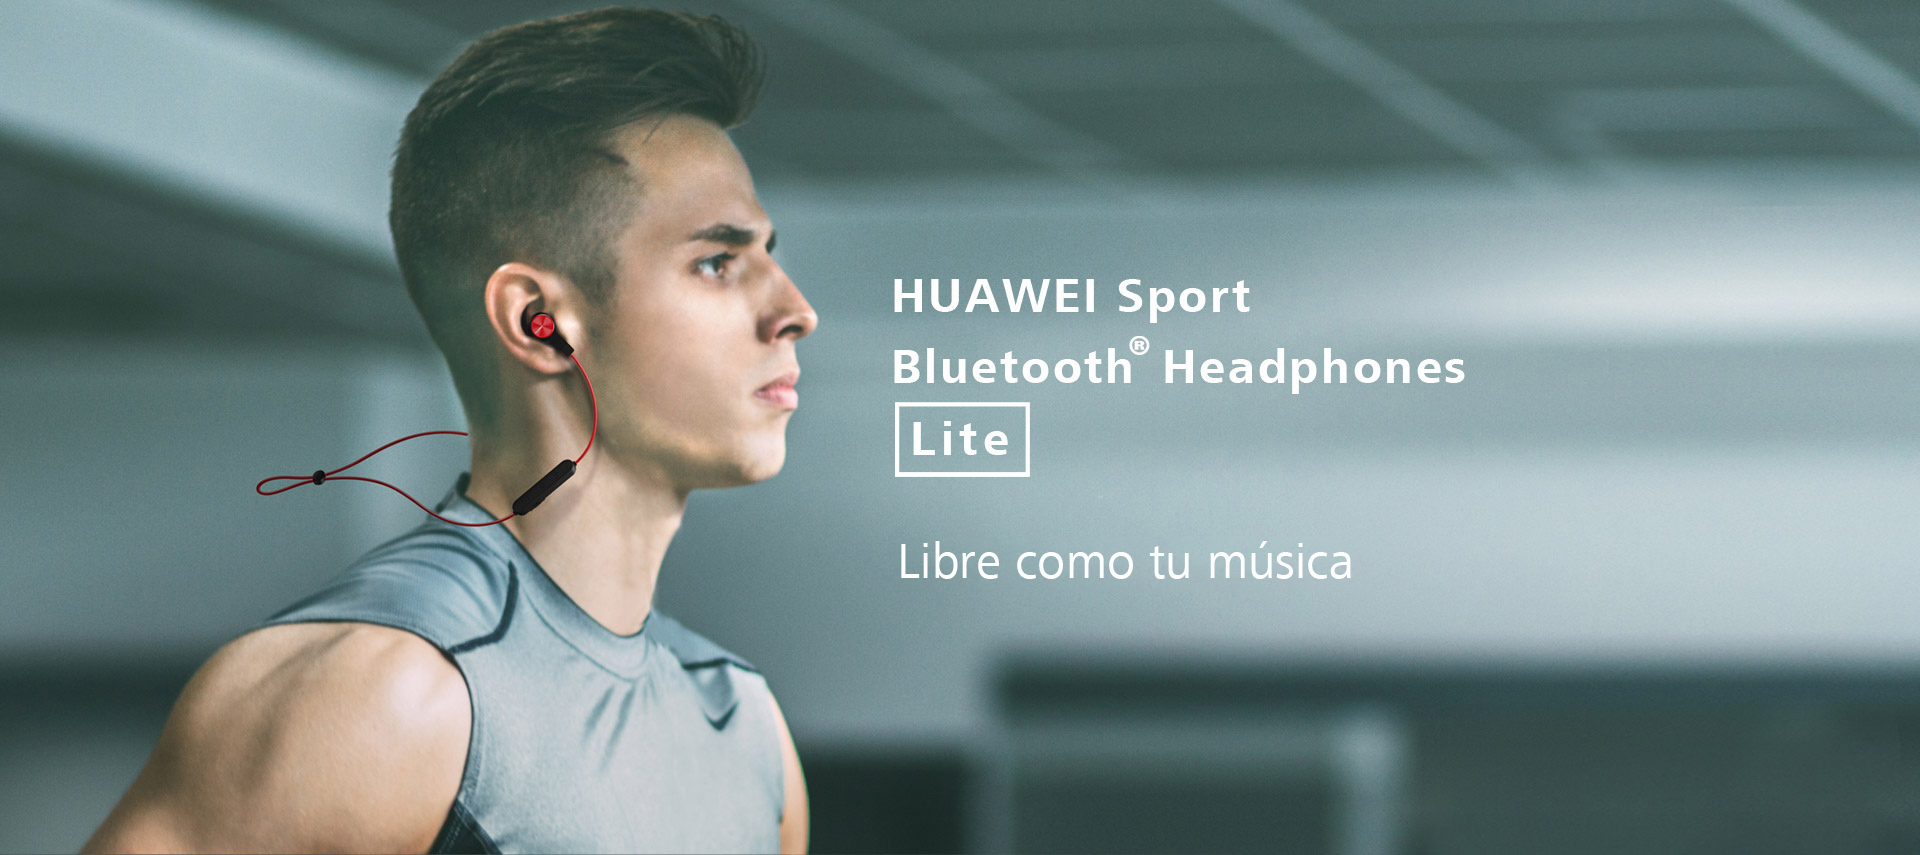 captura Surrey Girar en descubierto HUAWEI Sport Headphones Lite - HUAWEI Perú